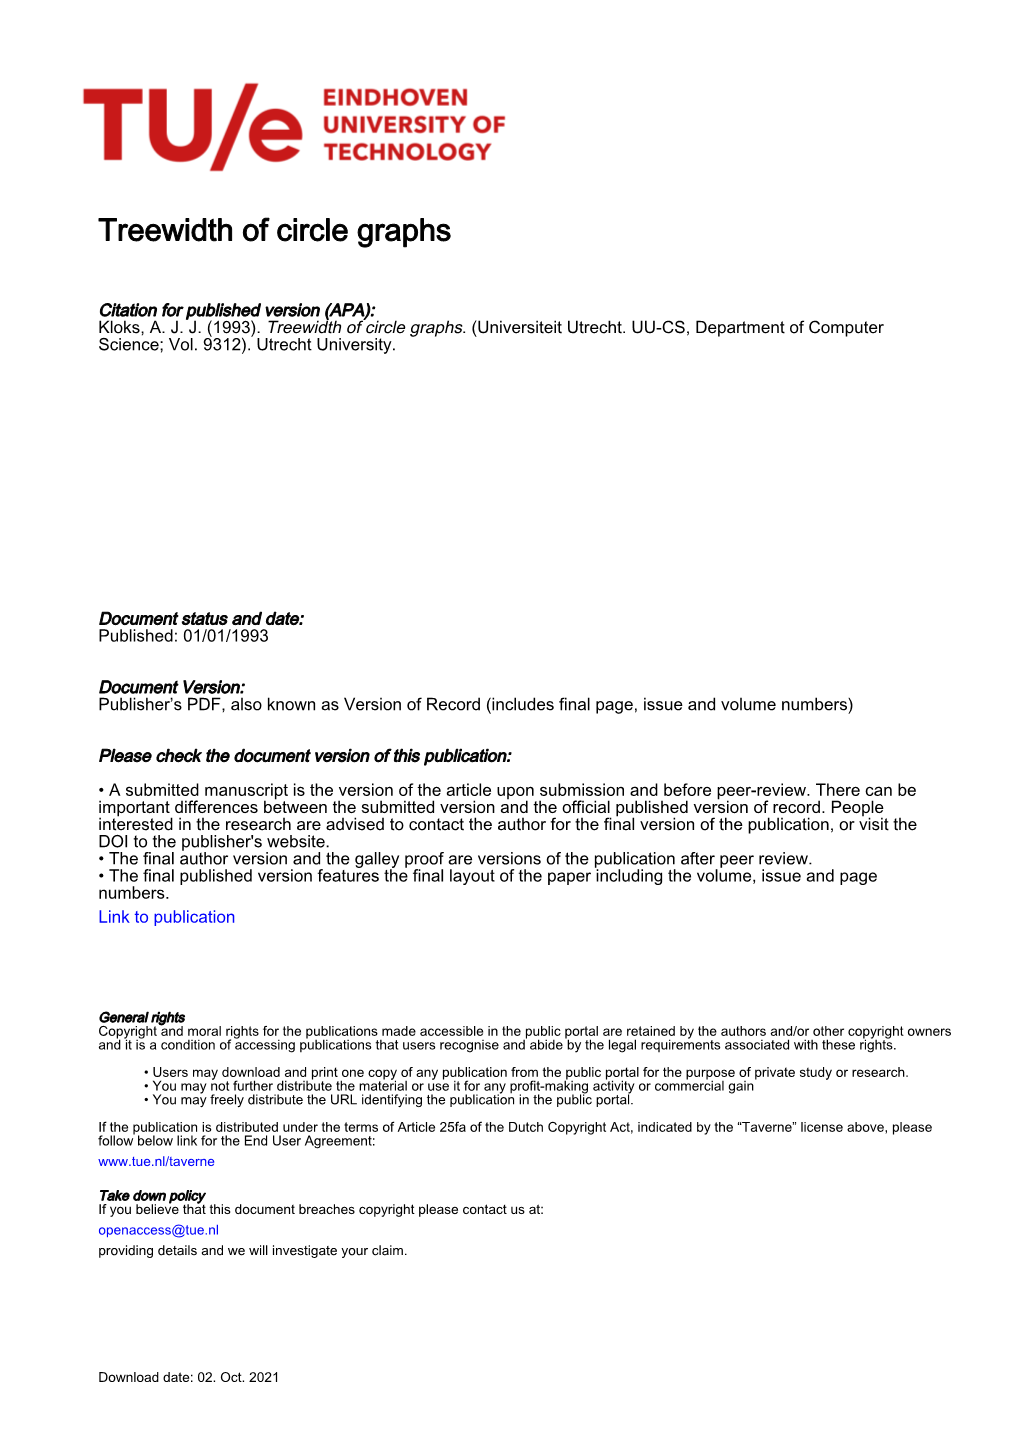 Treewidth of Circle Graphs